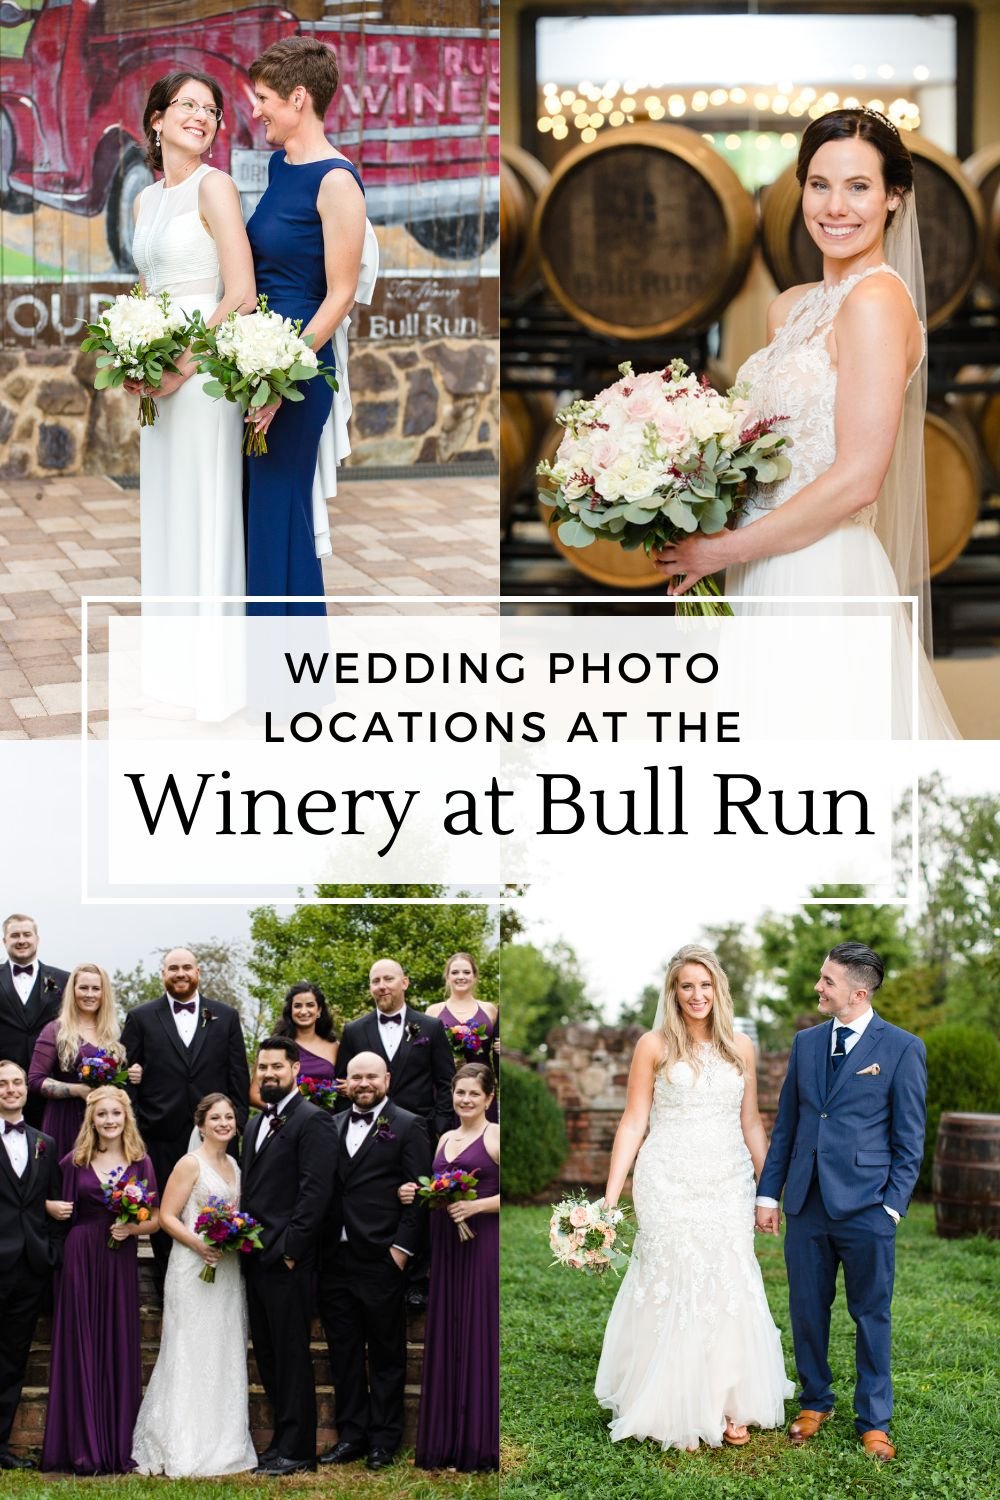 Winery at Bull Run wedding photo locations